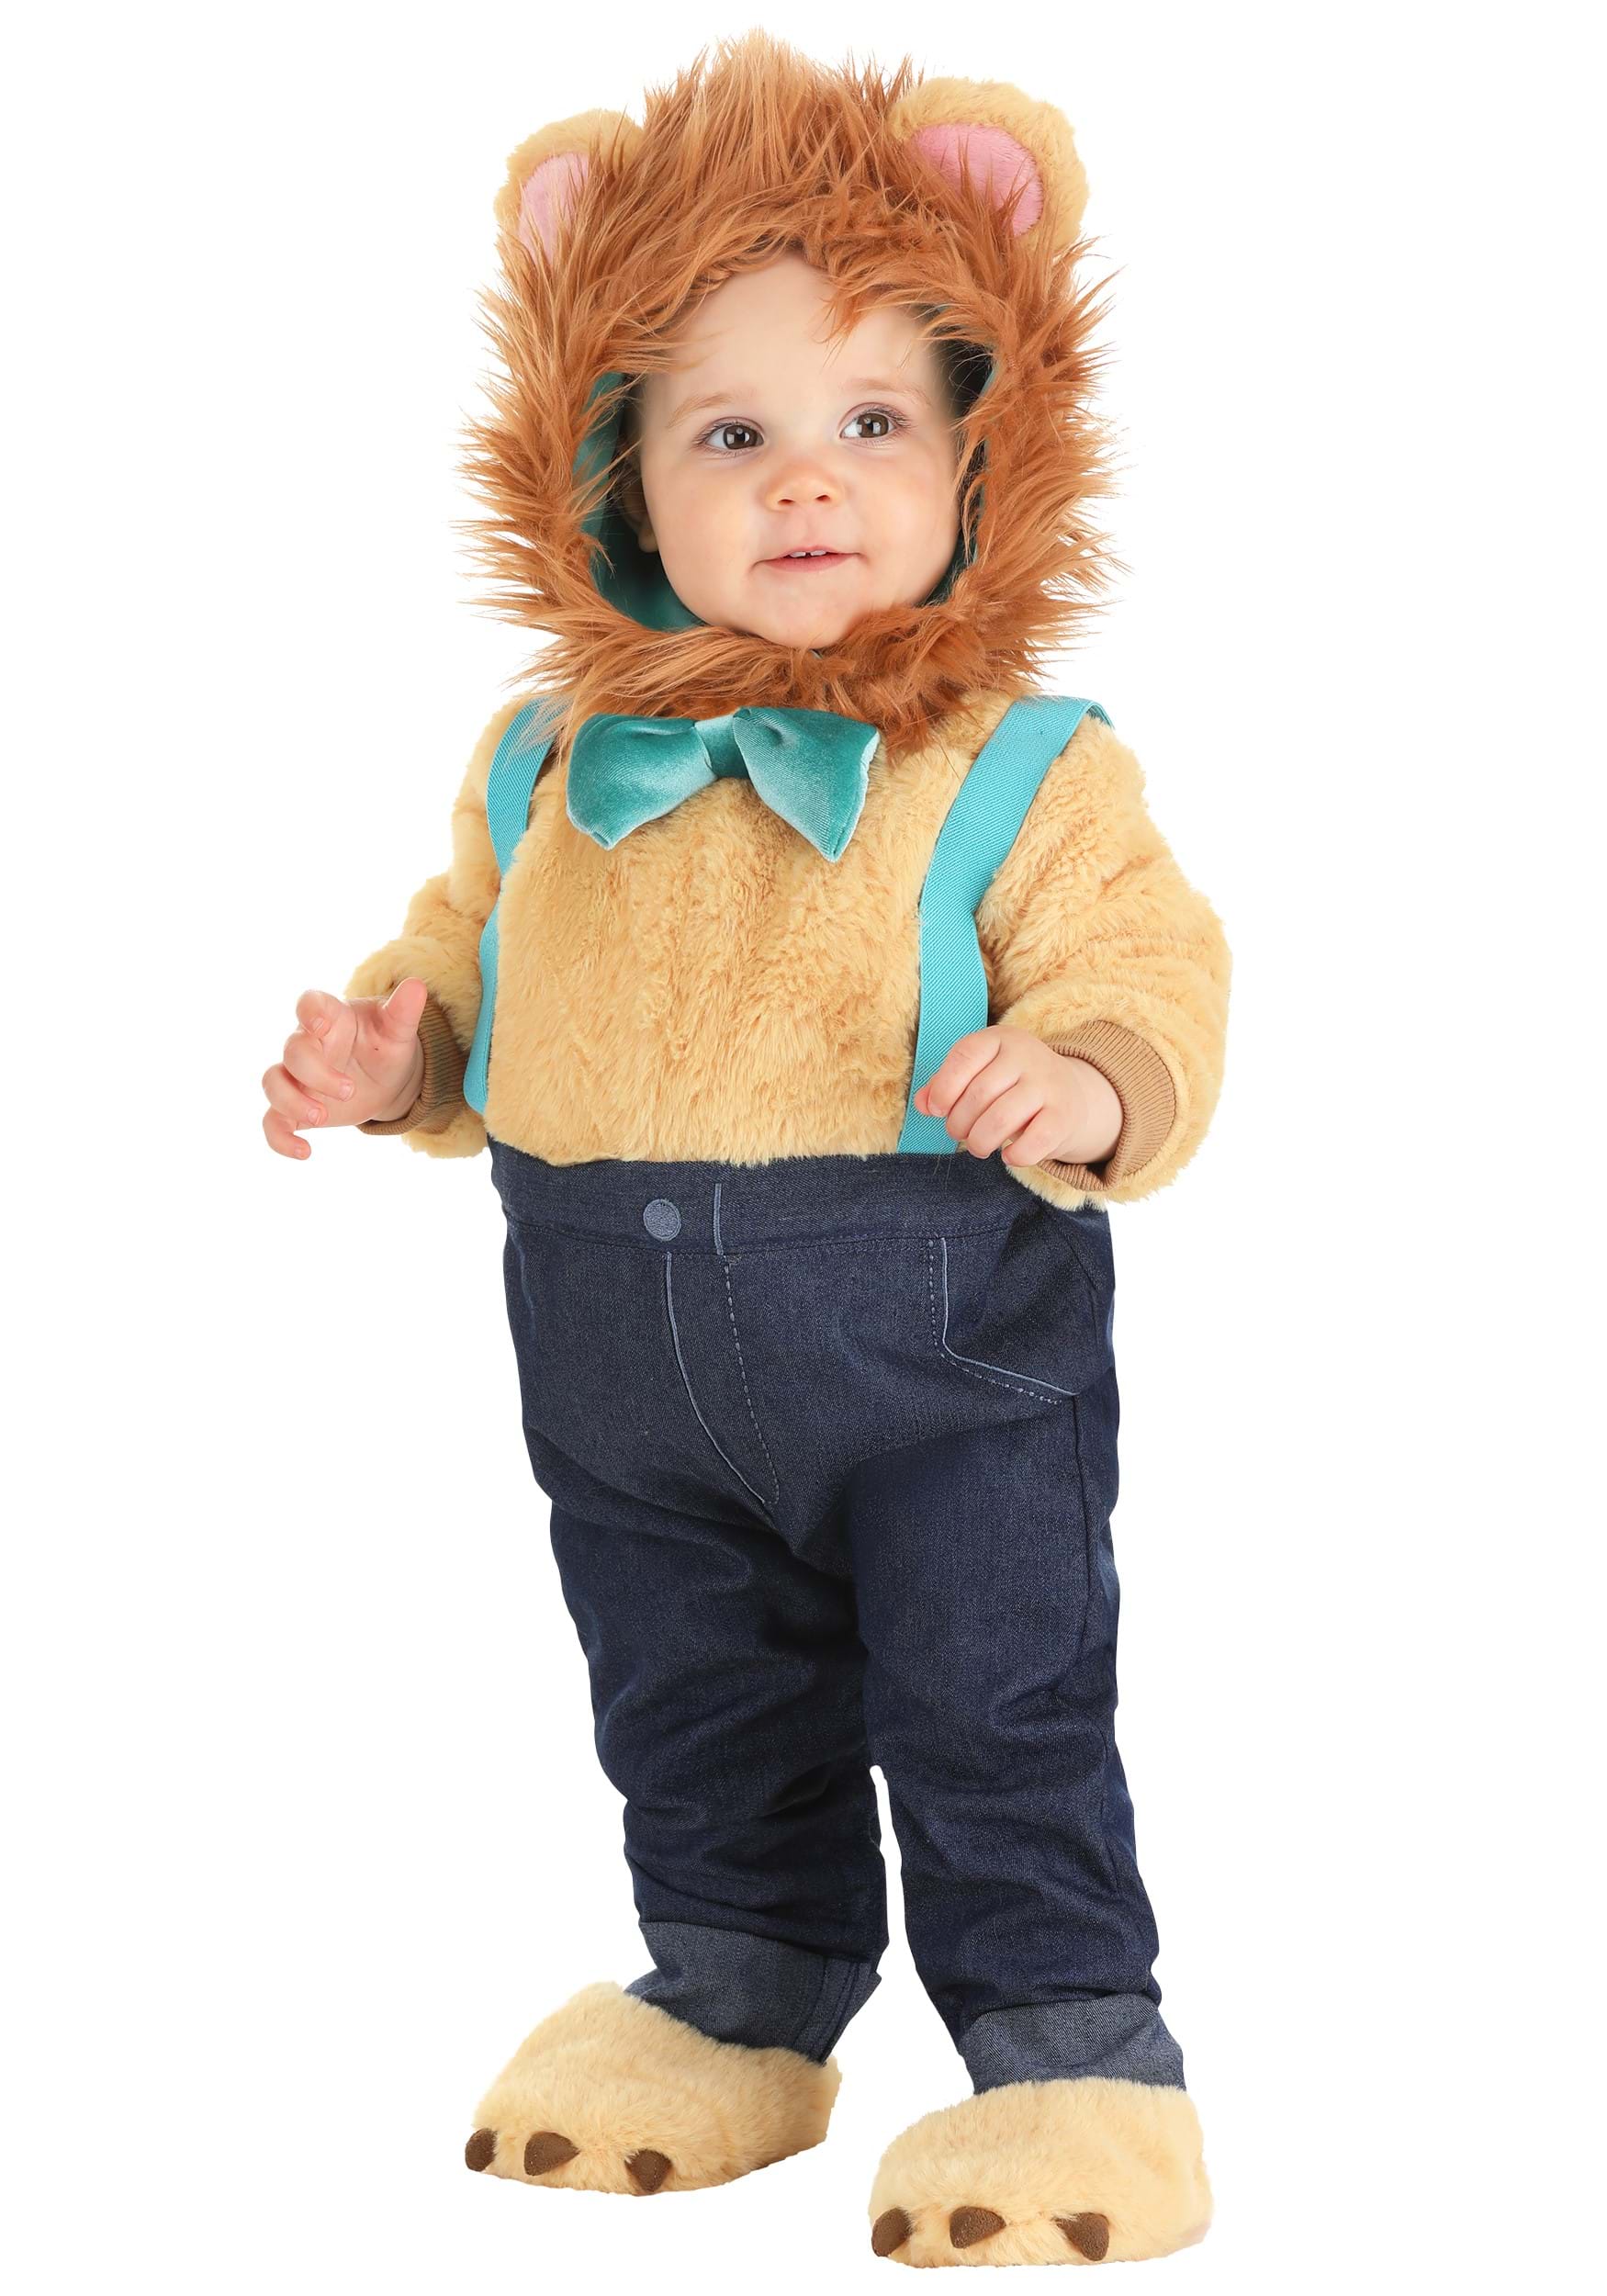 Posh Peanut Leo Lion Infant Costume